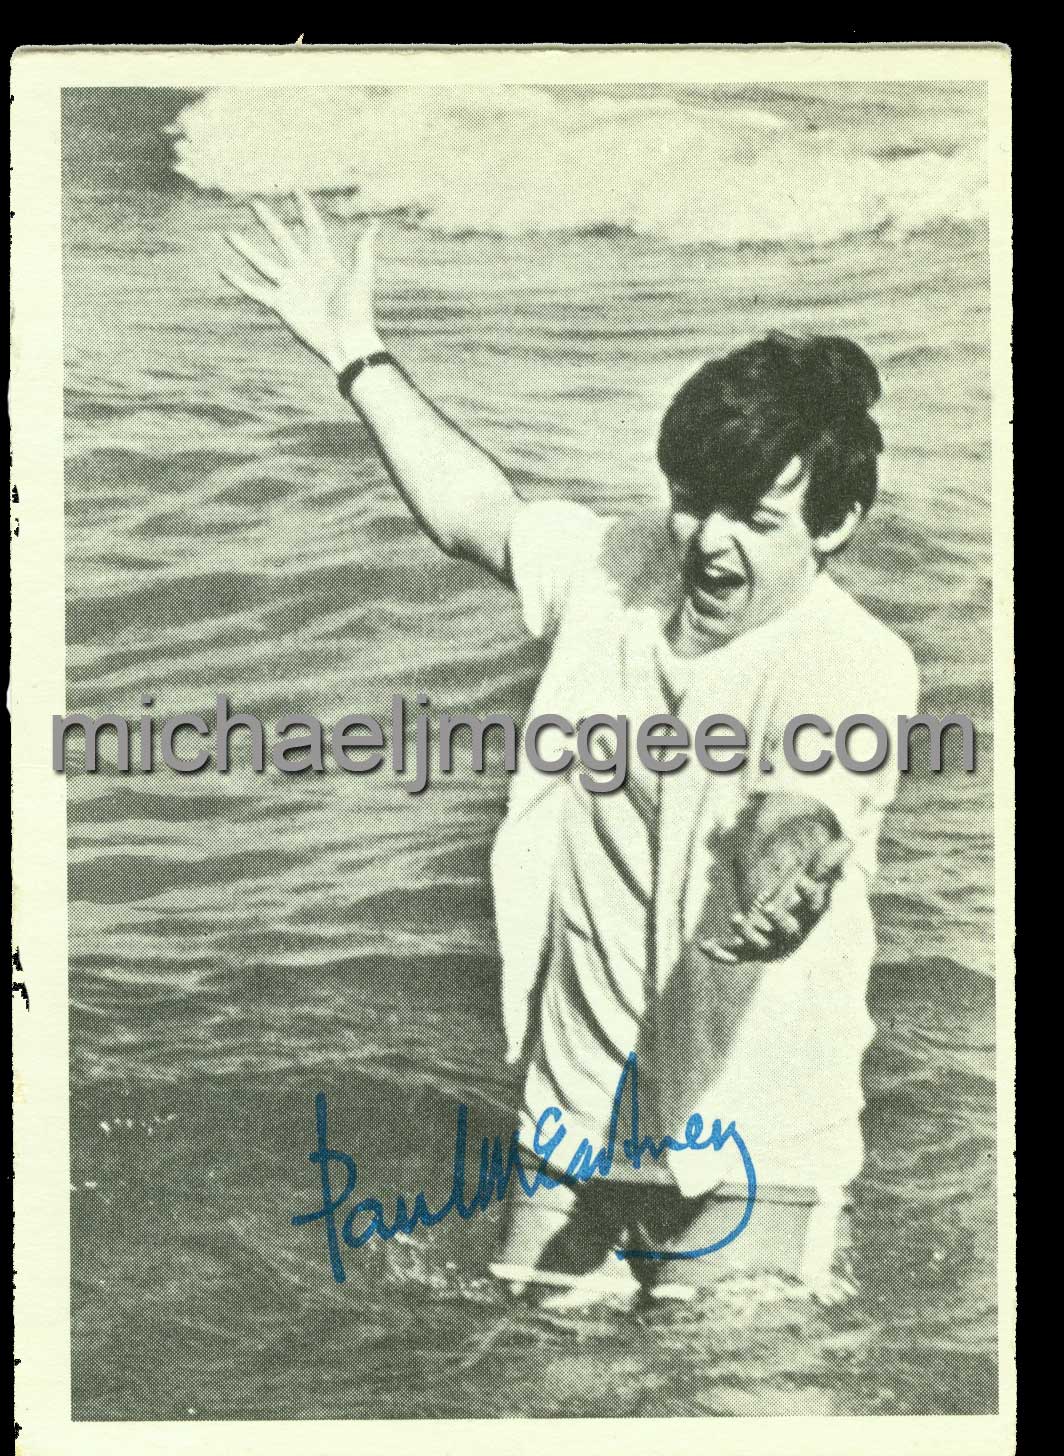 Paul McCartney / michaeljmcgee.com